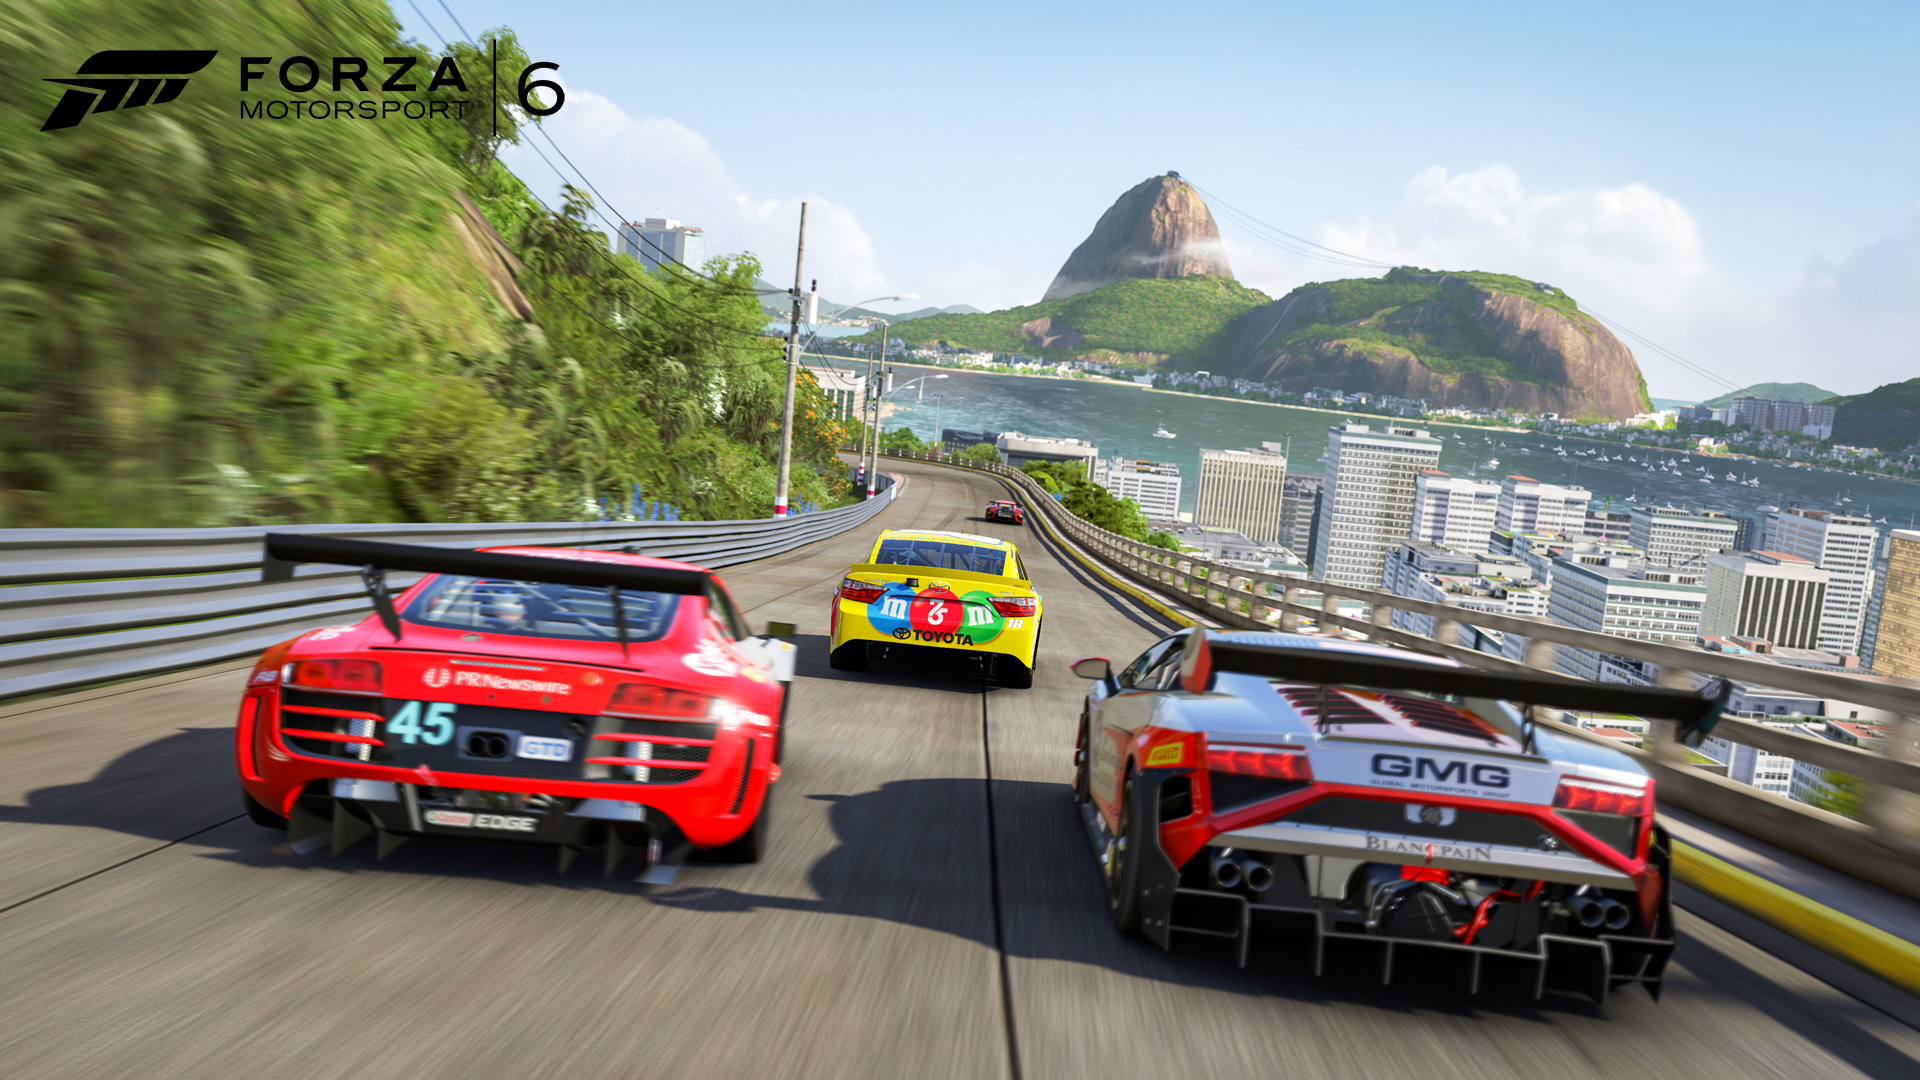 Forza 6 - Game Games - Loja de Games Online